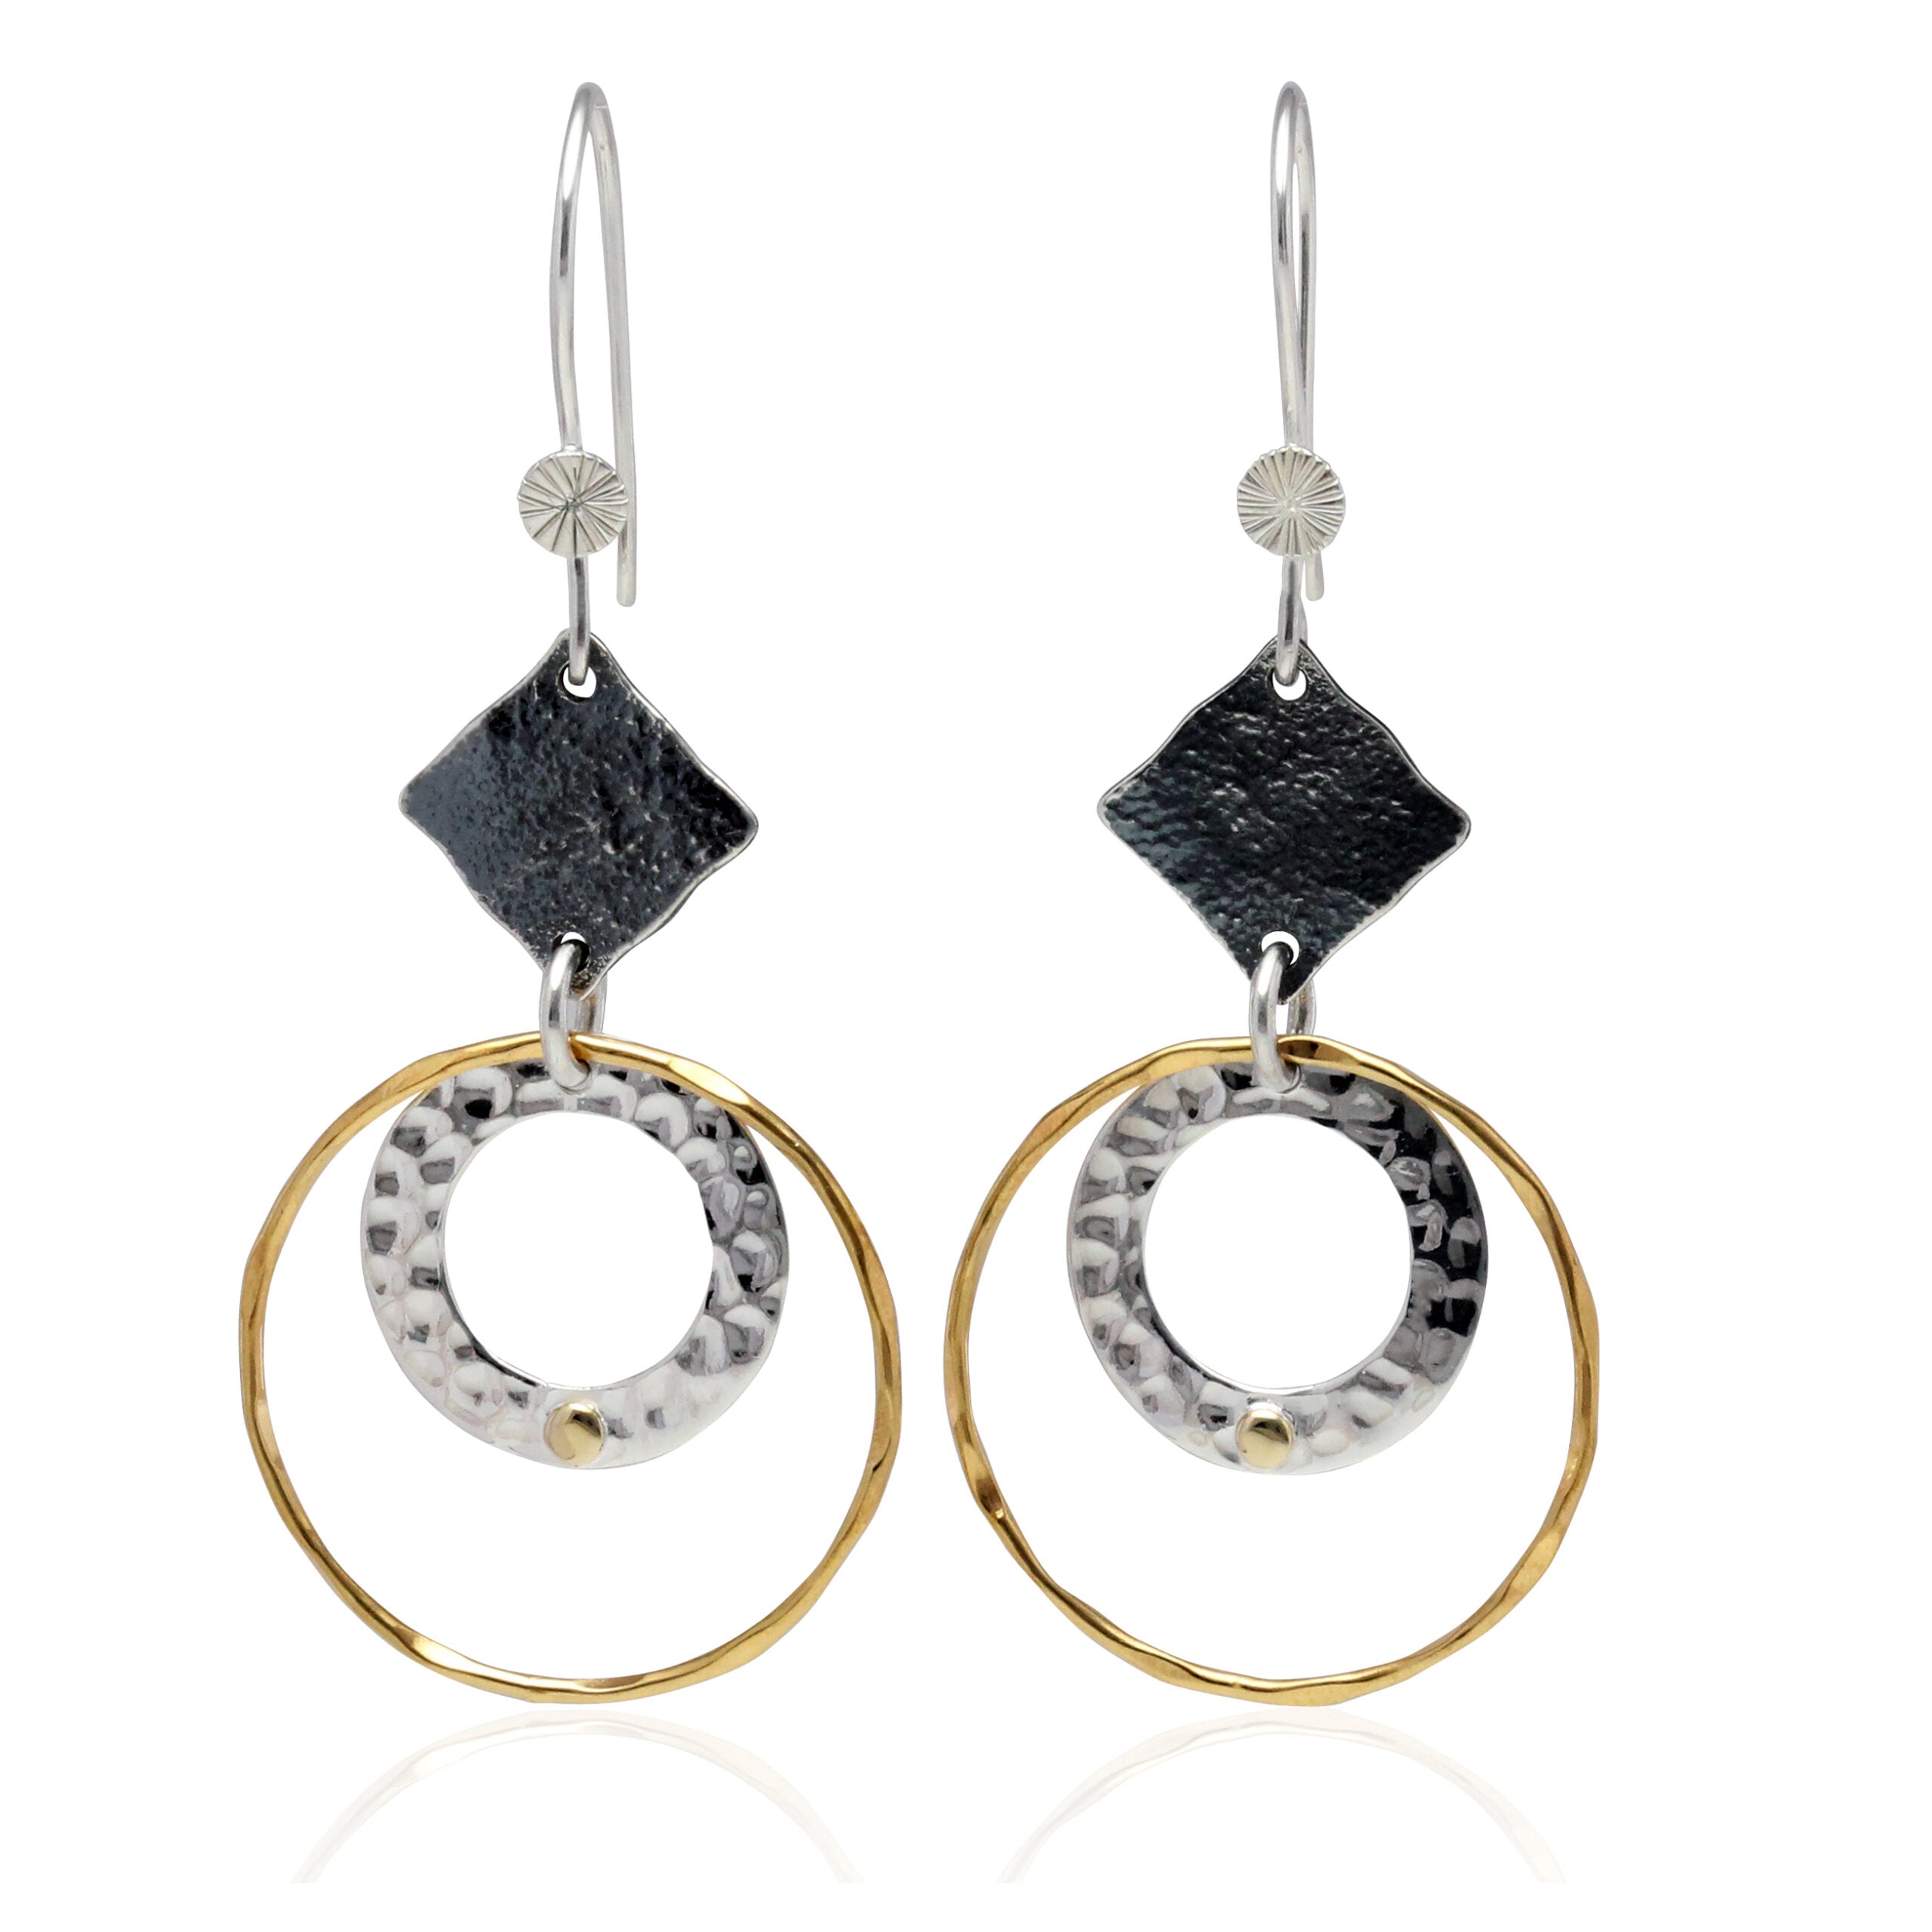 Organic Two-Tone Drops - The Nancy Smillie Shop - Art, Jewellery & Designer Gifts Glasgow